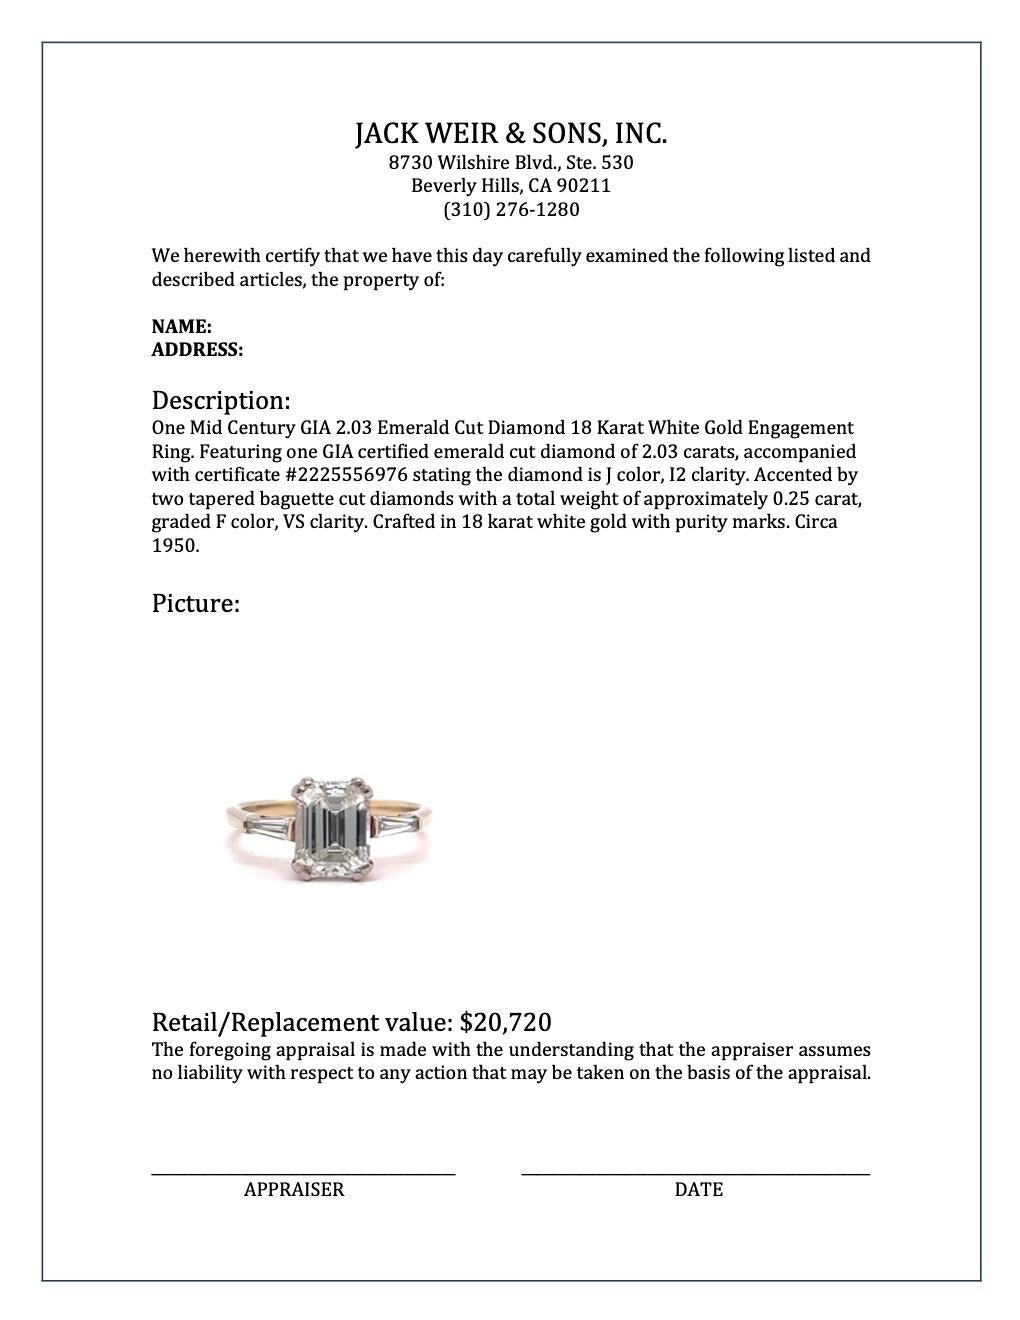 Mid Century GIA 2.03 Emerald Cut Diamond 18 Karat White Gold Engagement Ring 5